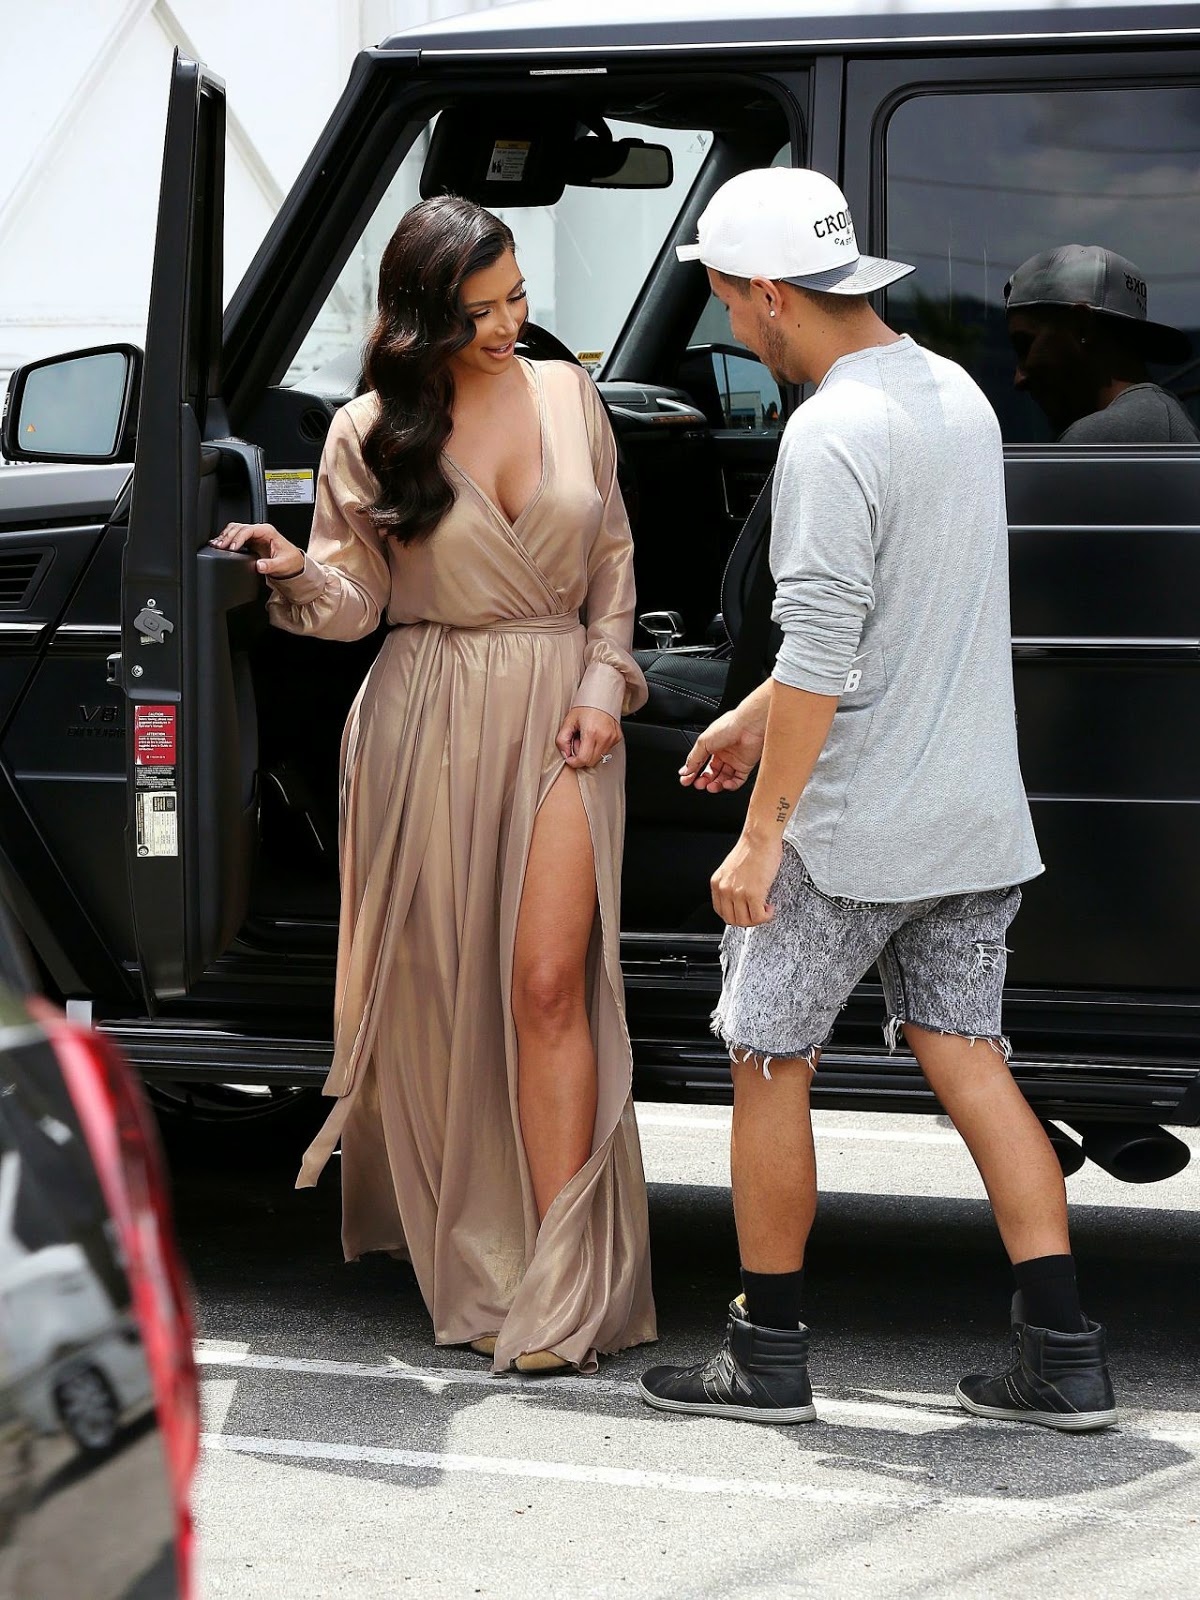 Kim Kardashian Hot Cleavage and legs Show Latest Photoshoot 2014 Wallpapers Hot sexy model stills bikini